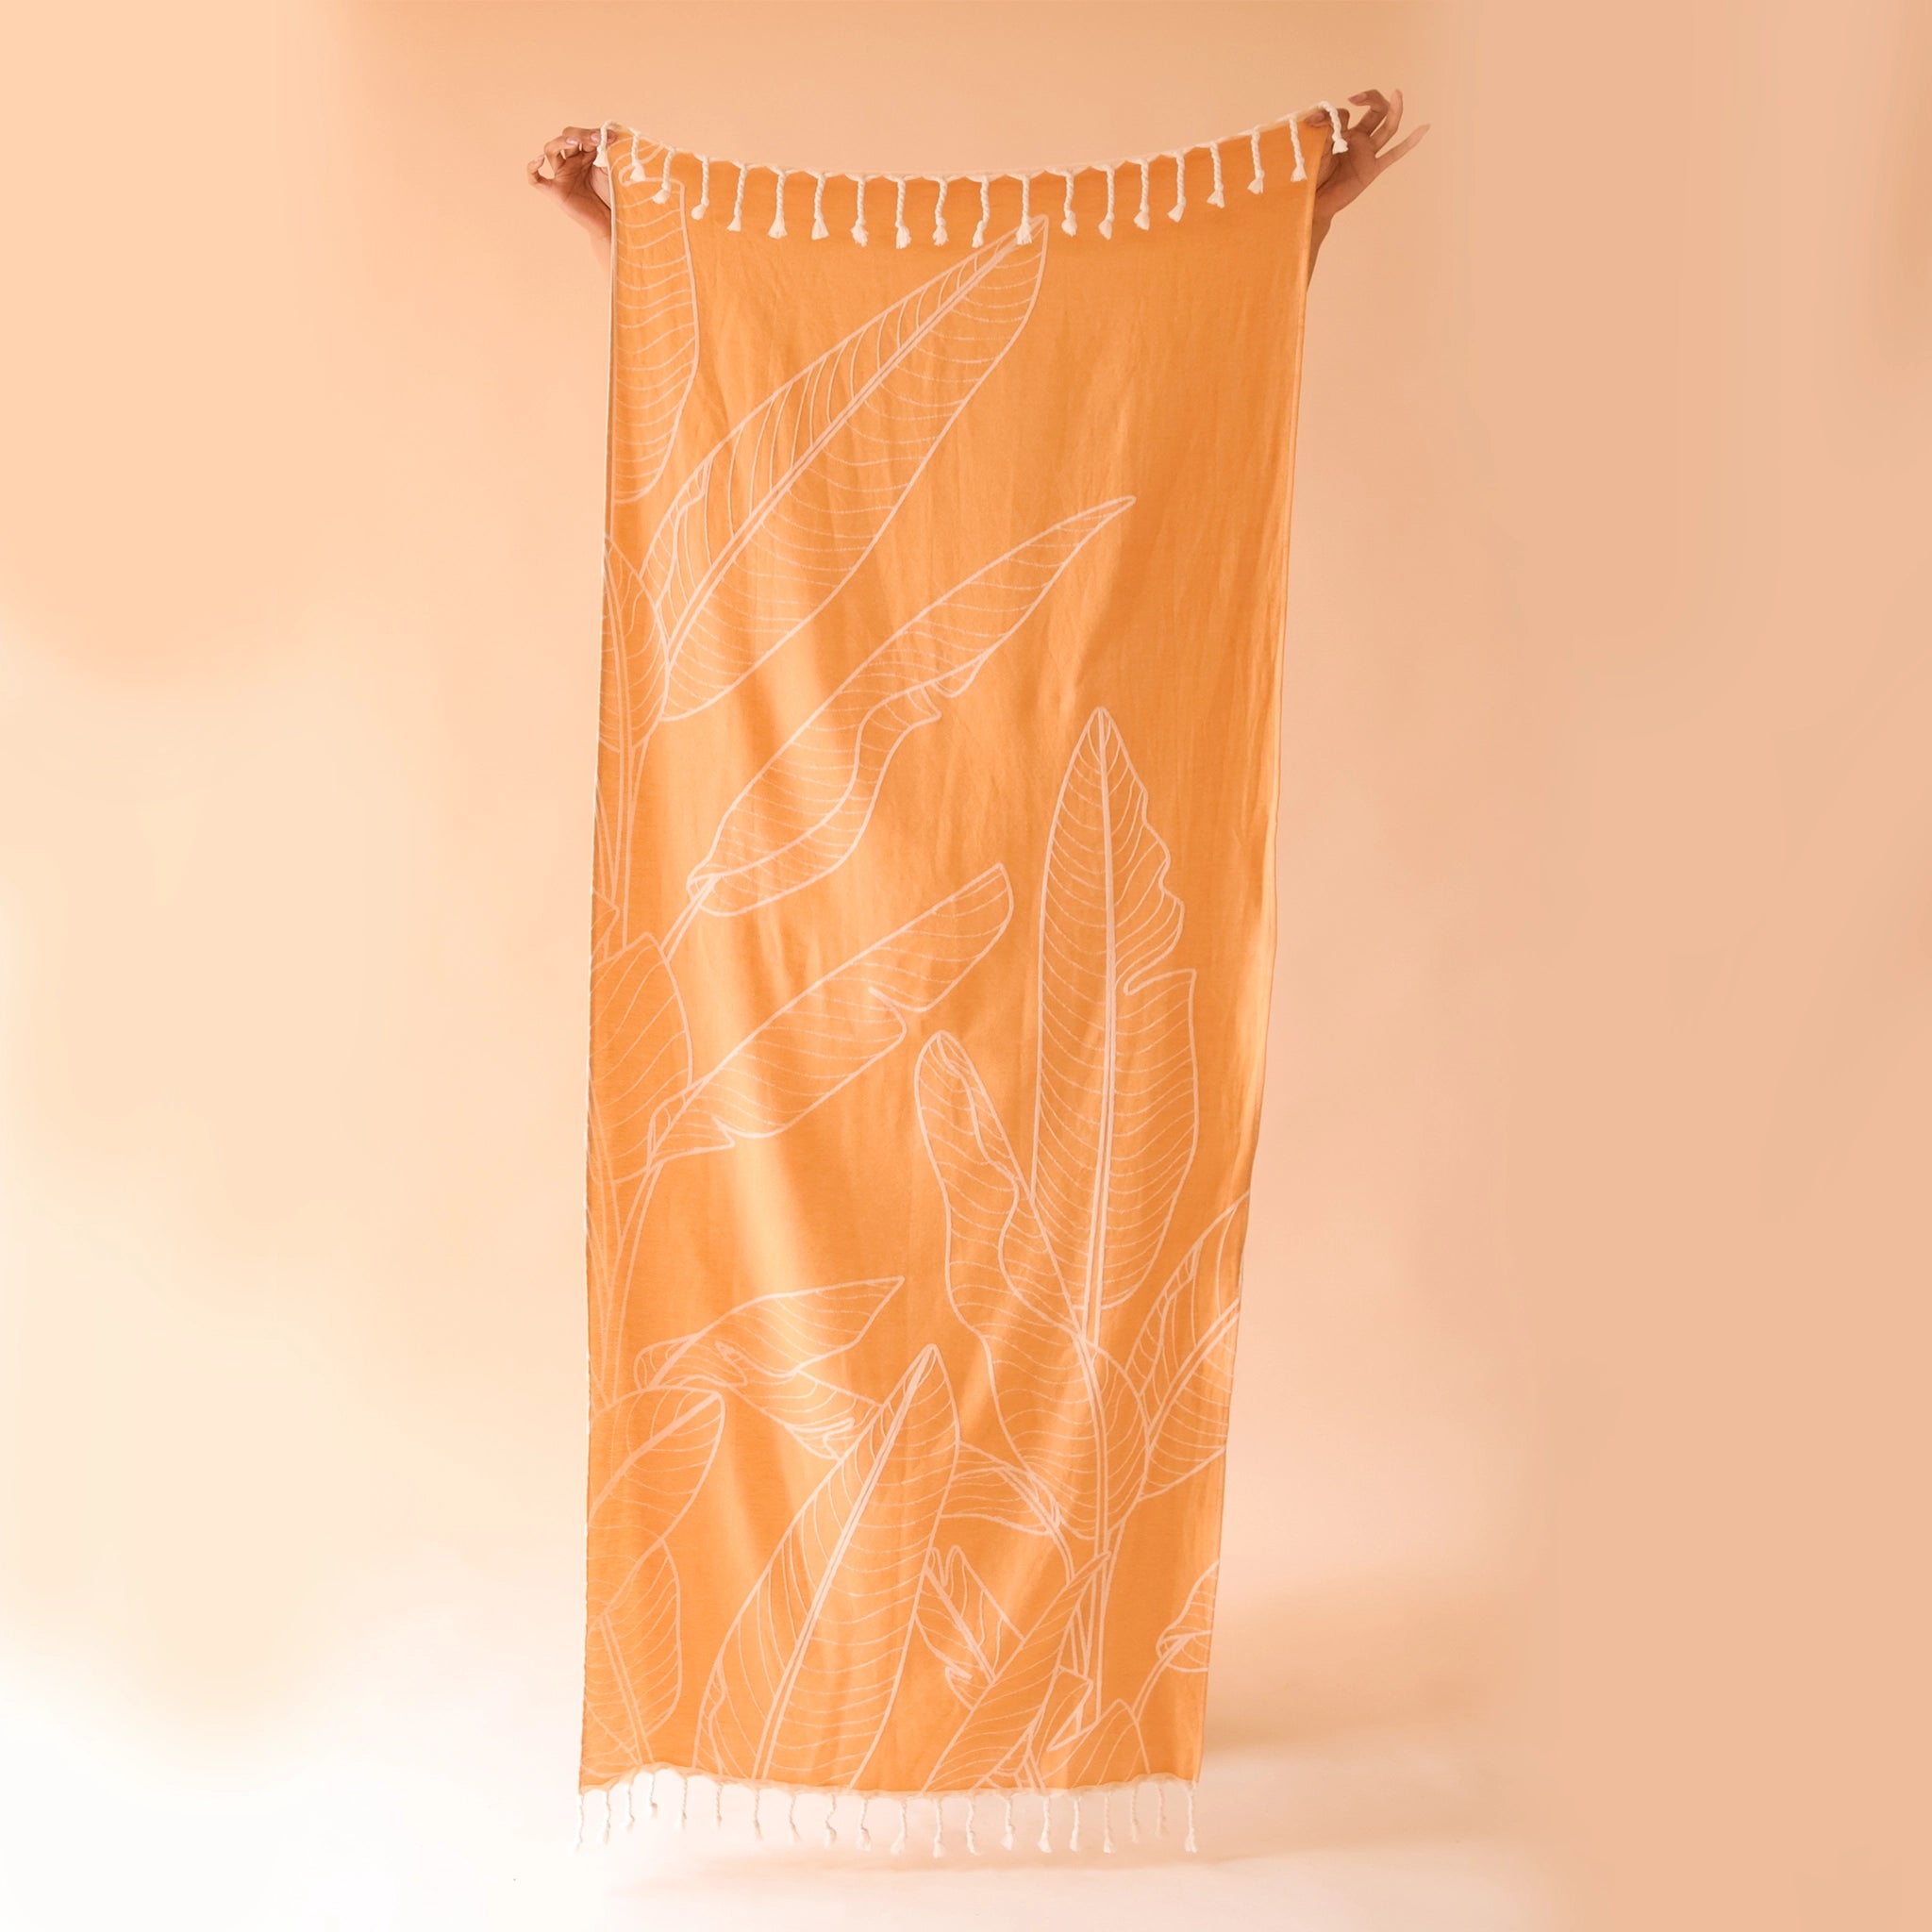 An orange beach towel with a banana leaf print and white tassels on each end.